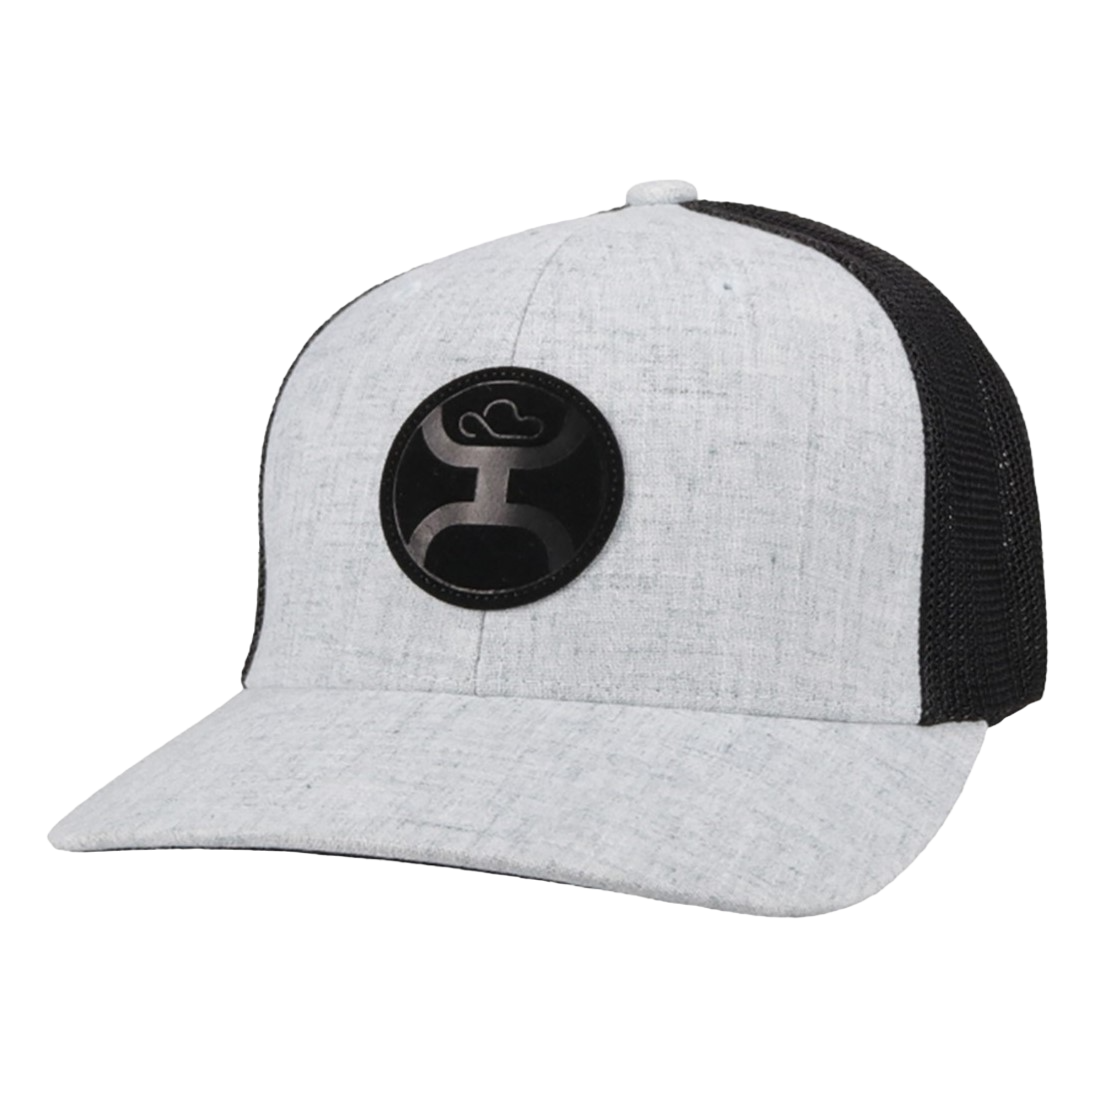 Hooey Men's Cayman II Grey and Black Flexfit Hat 2104BLBK